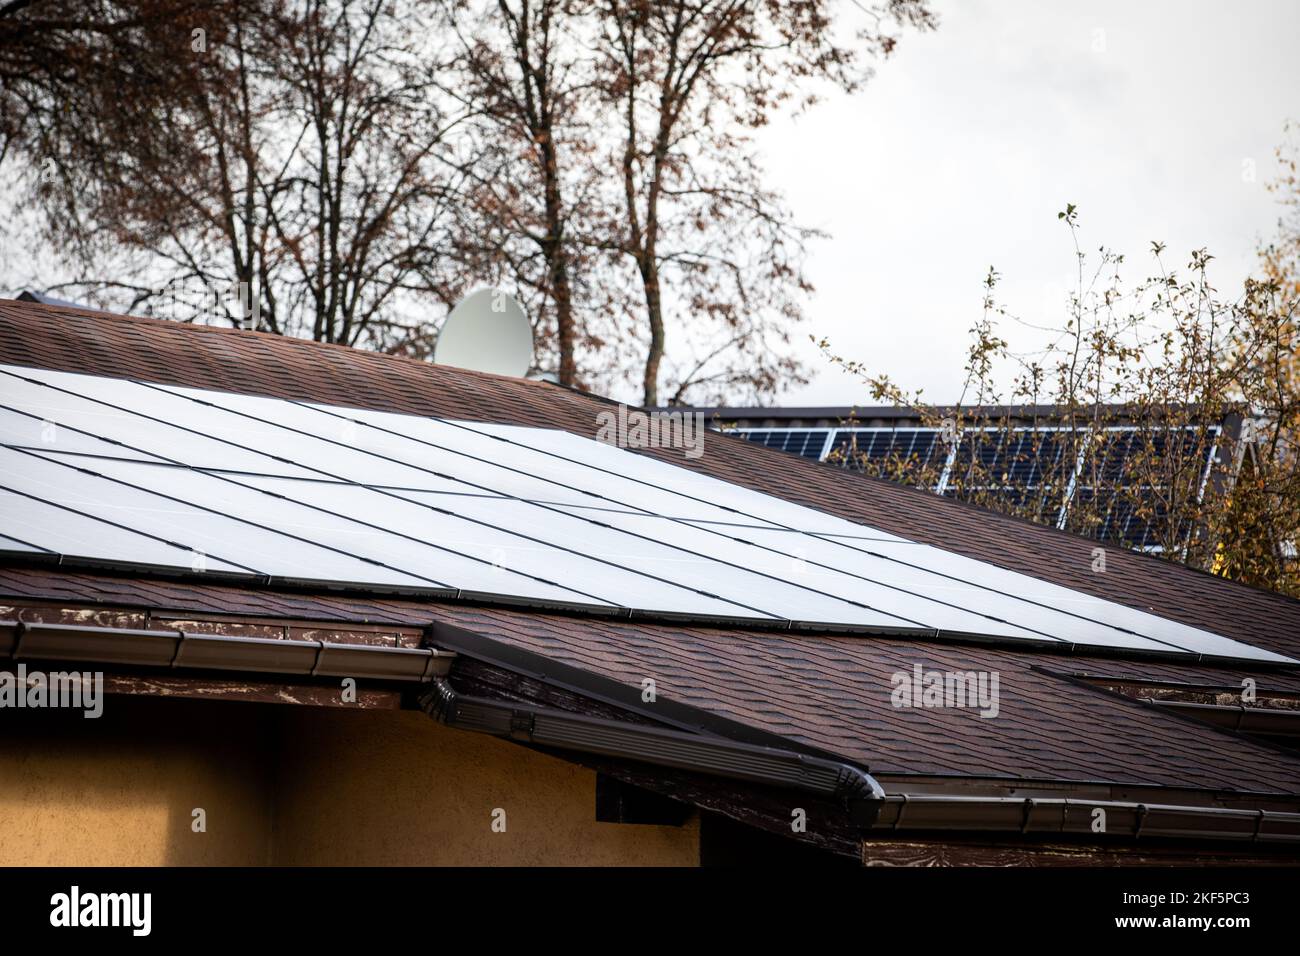 Solar panels on a shingle roof. Heating season, autumn and winter. Stock Photo